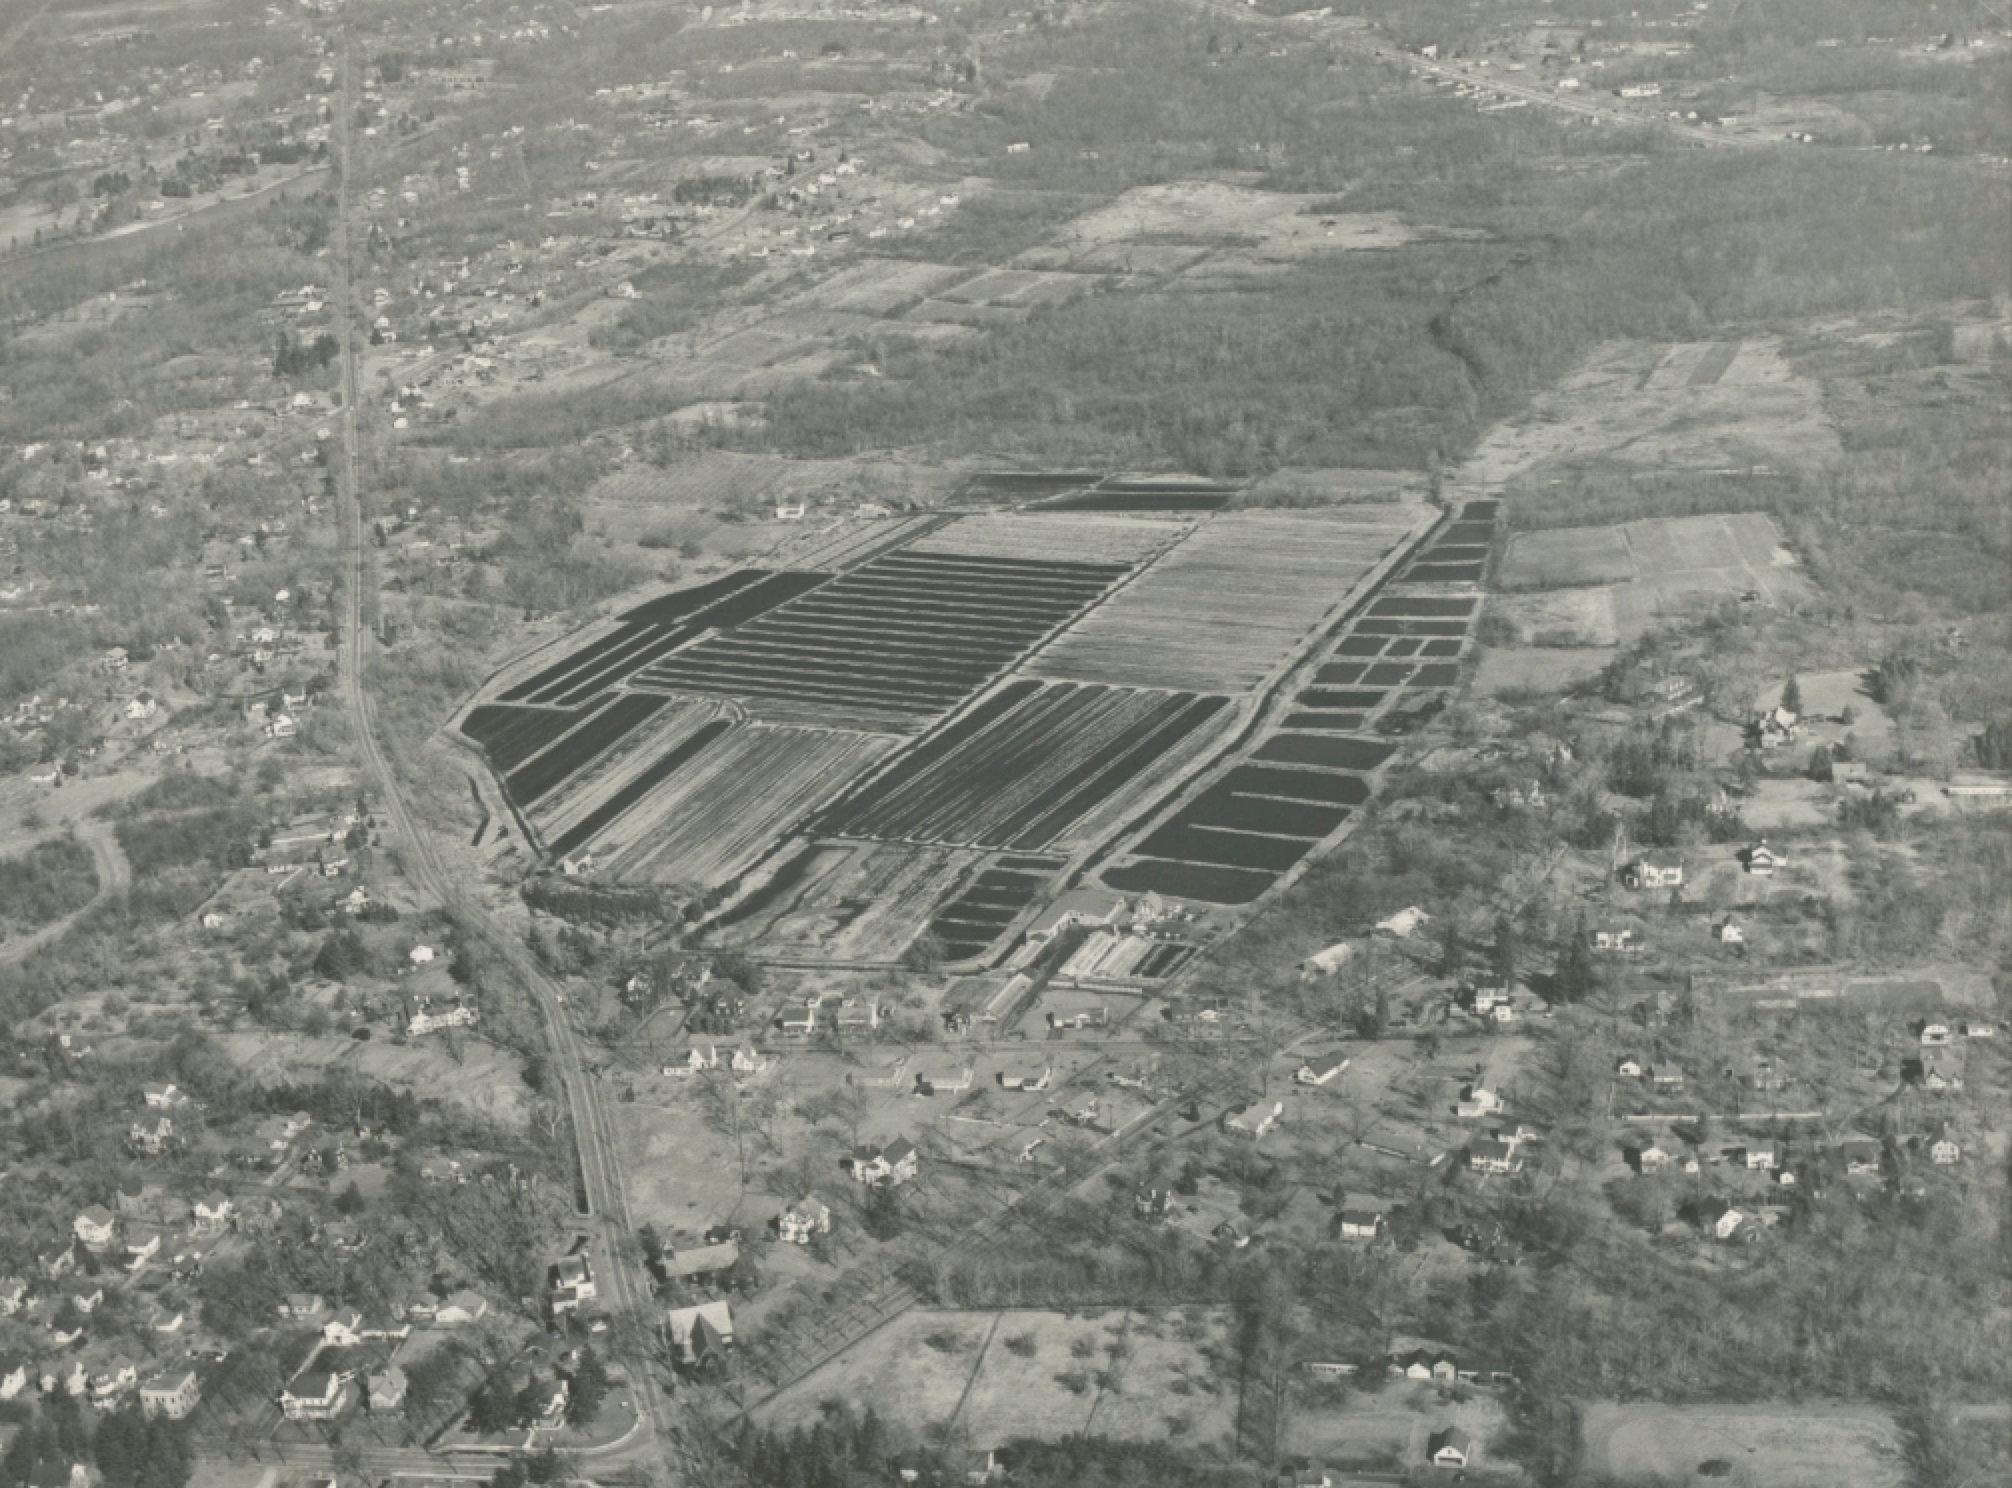 Celery Farm Aerial View 1950s